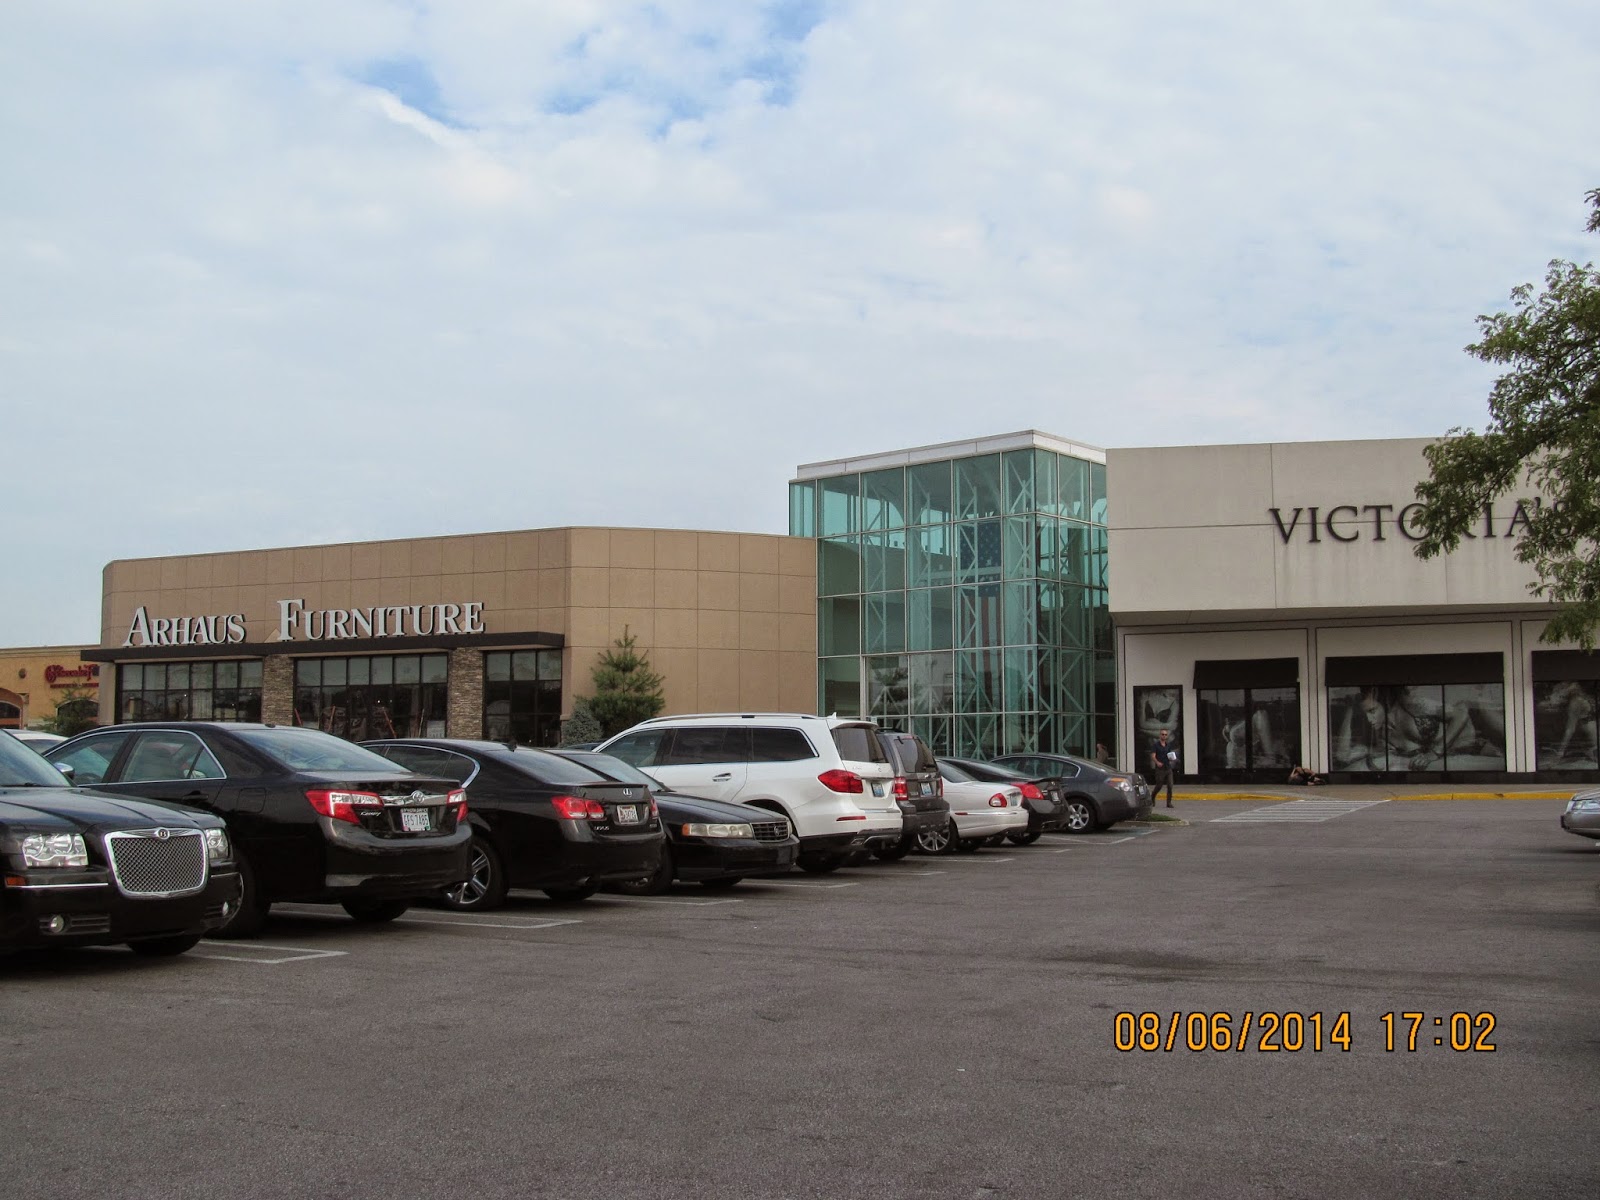 Trip to the Mall: Mall St. Matthews- (Louisville, KY)